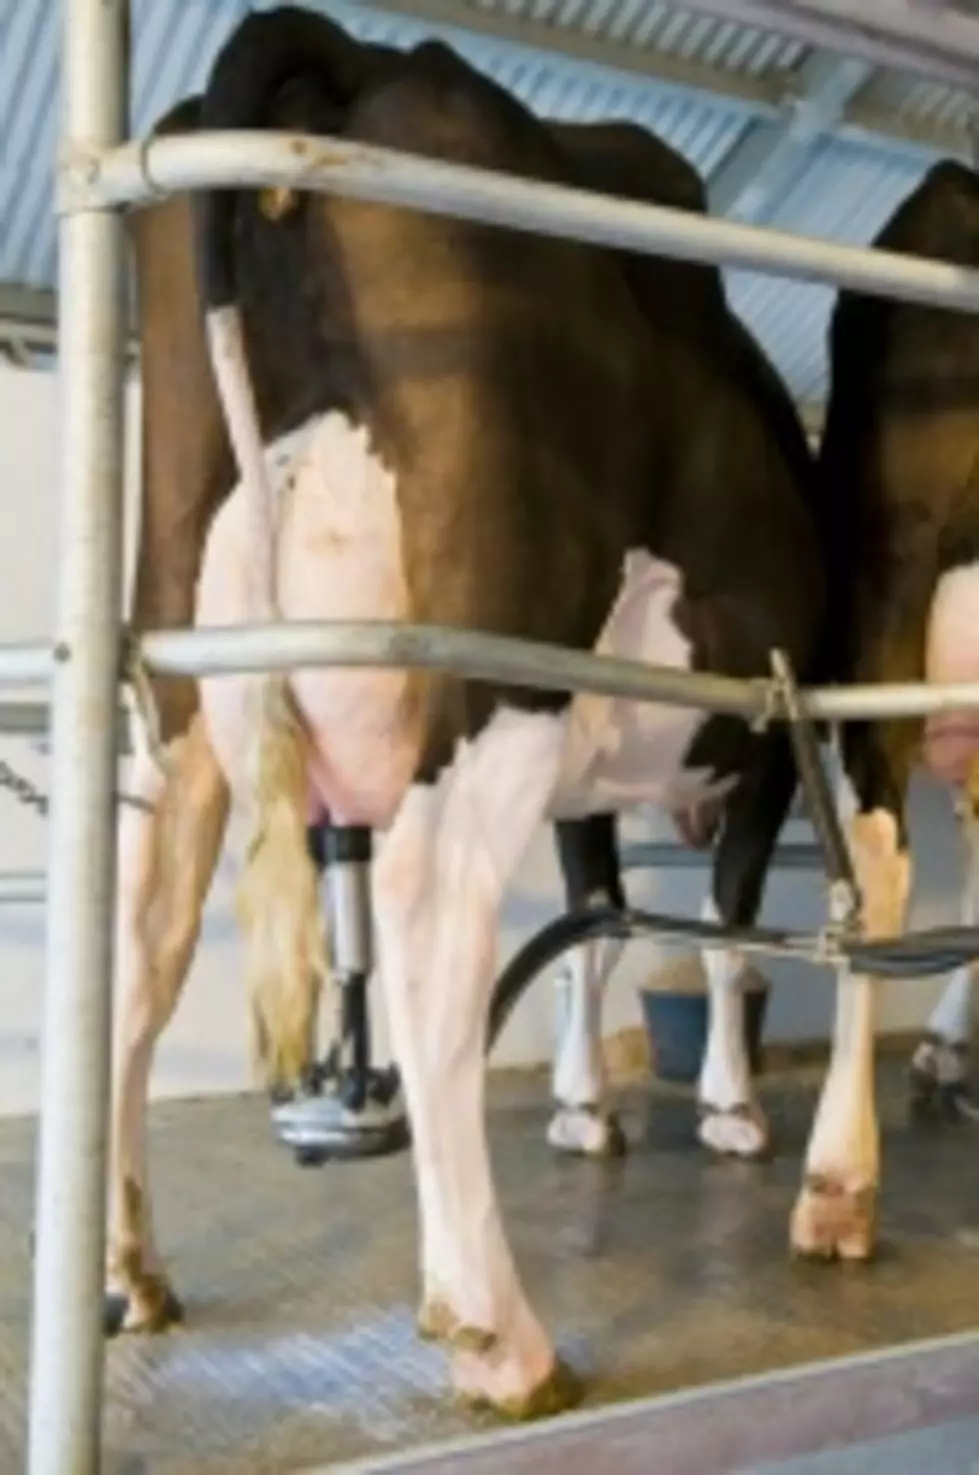 Idaho No Longer Member of Top Three Milk Producers